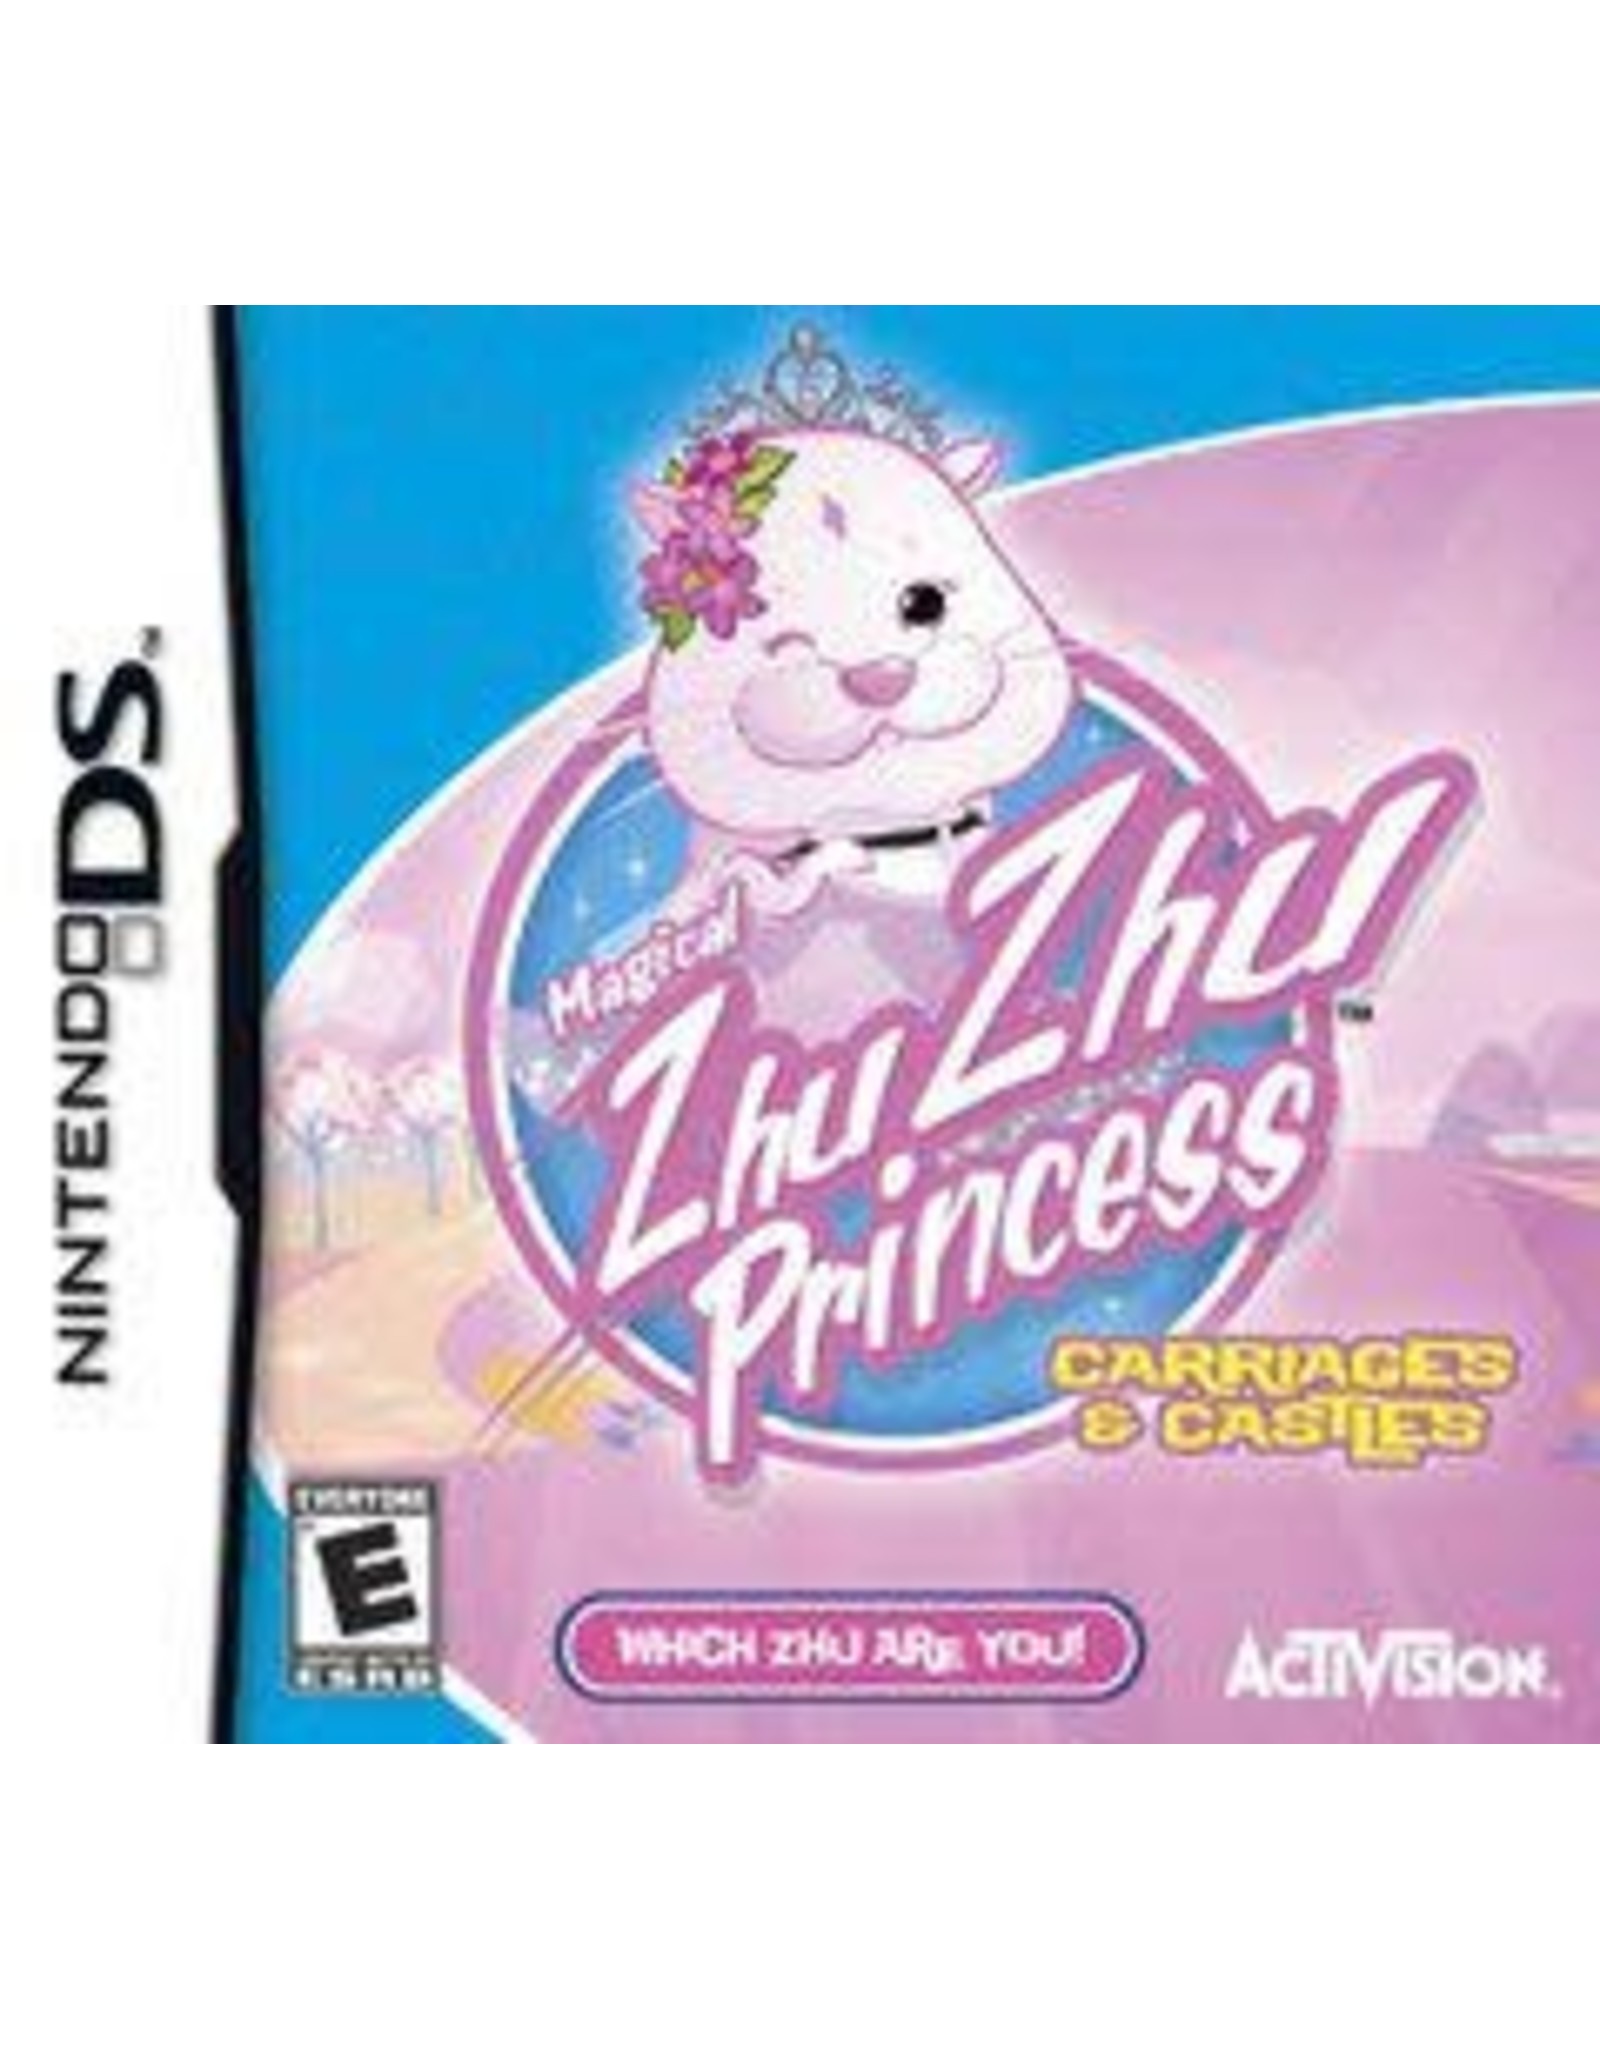 Nintendo DS Magical Zhu Zhu Princess: Carriages & Castles (Cart Only)